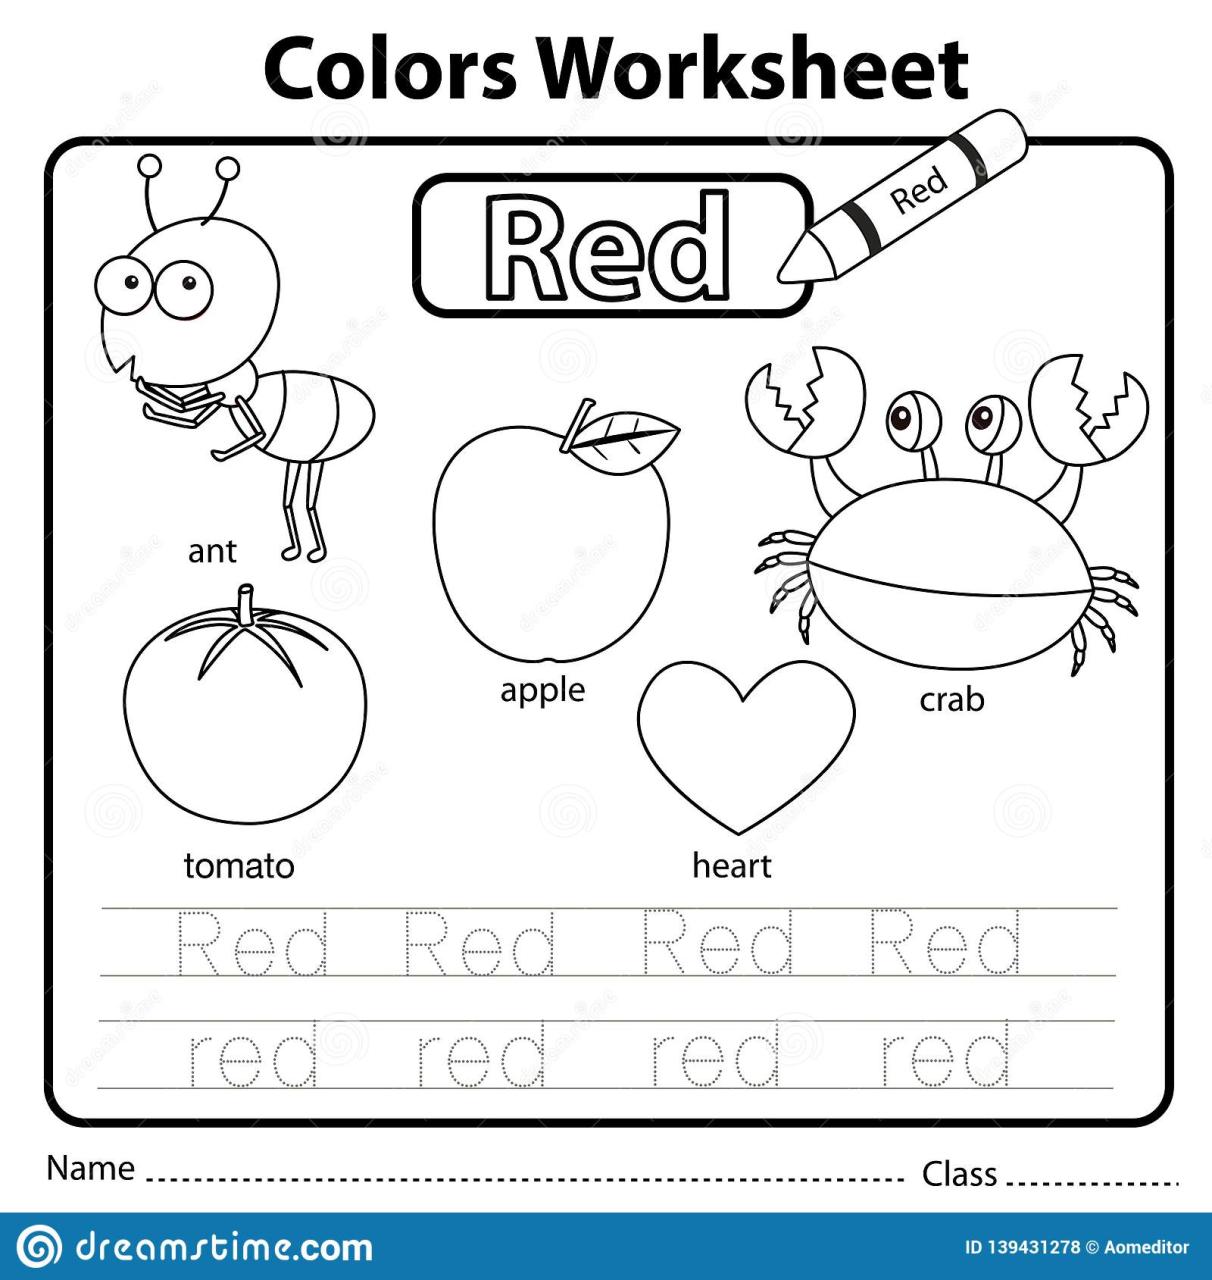 Worksheet For Preschoolers On Colors Printable Worksheets and